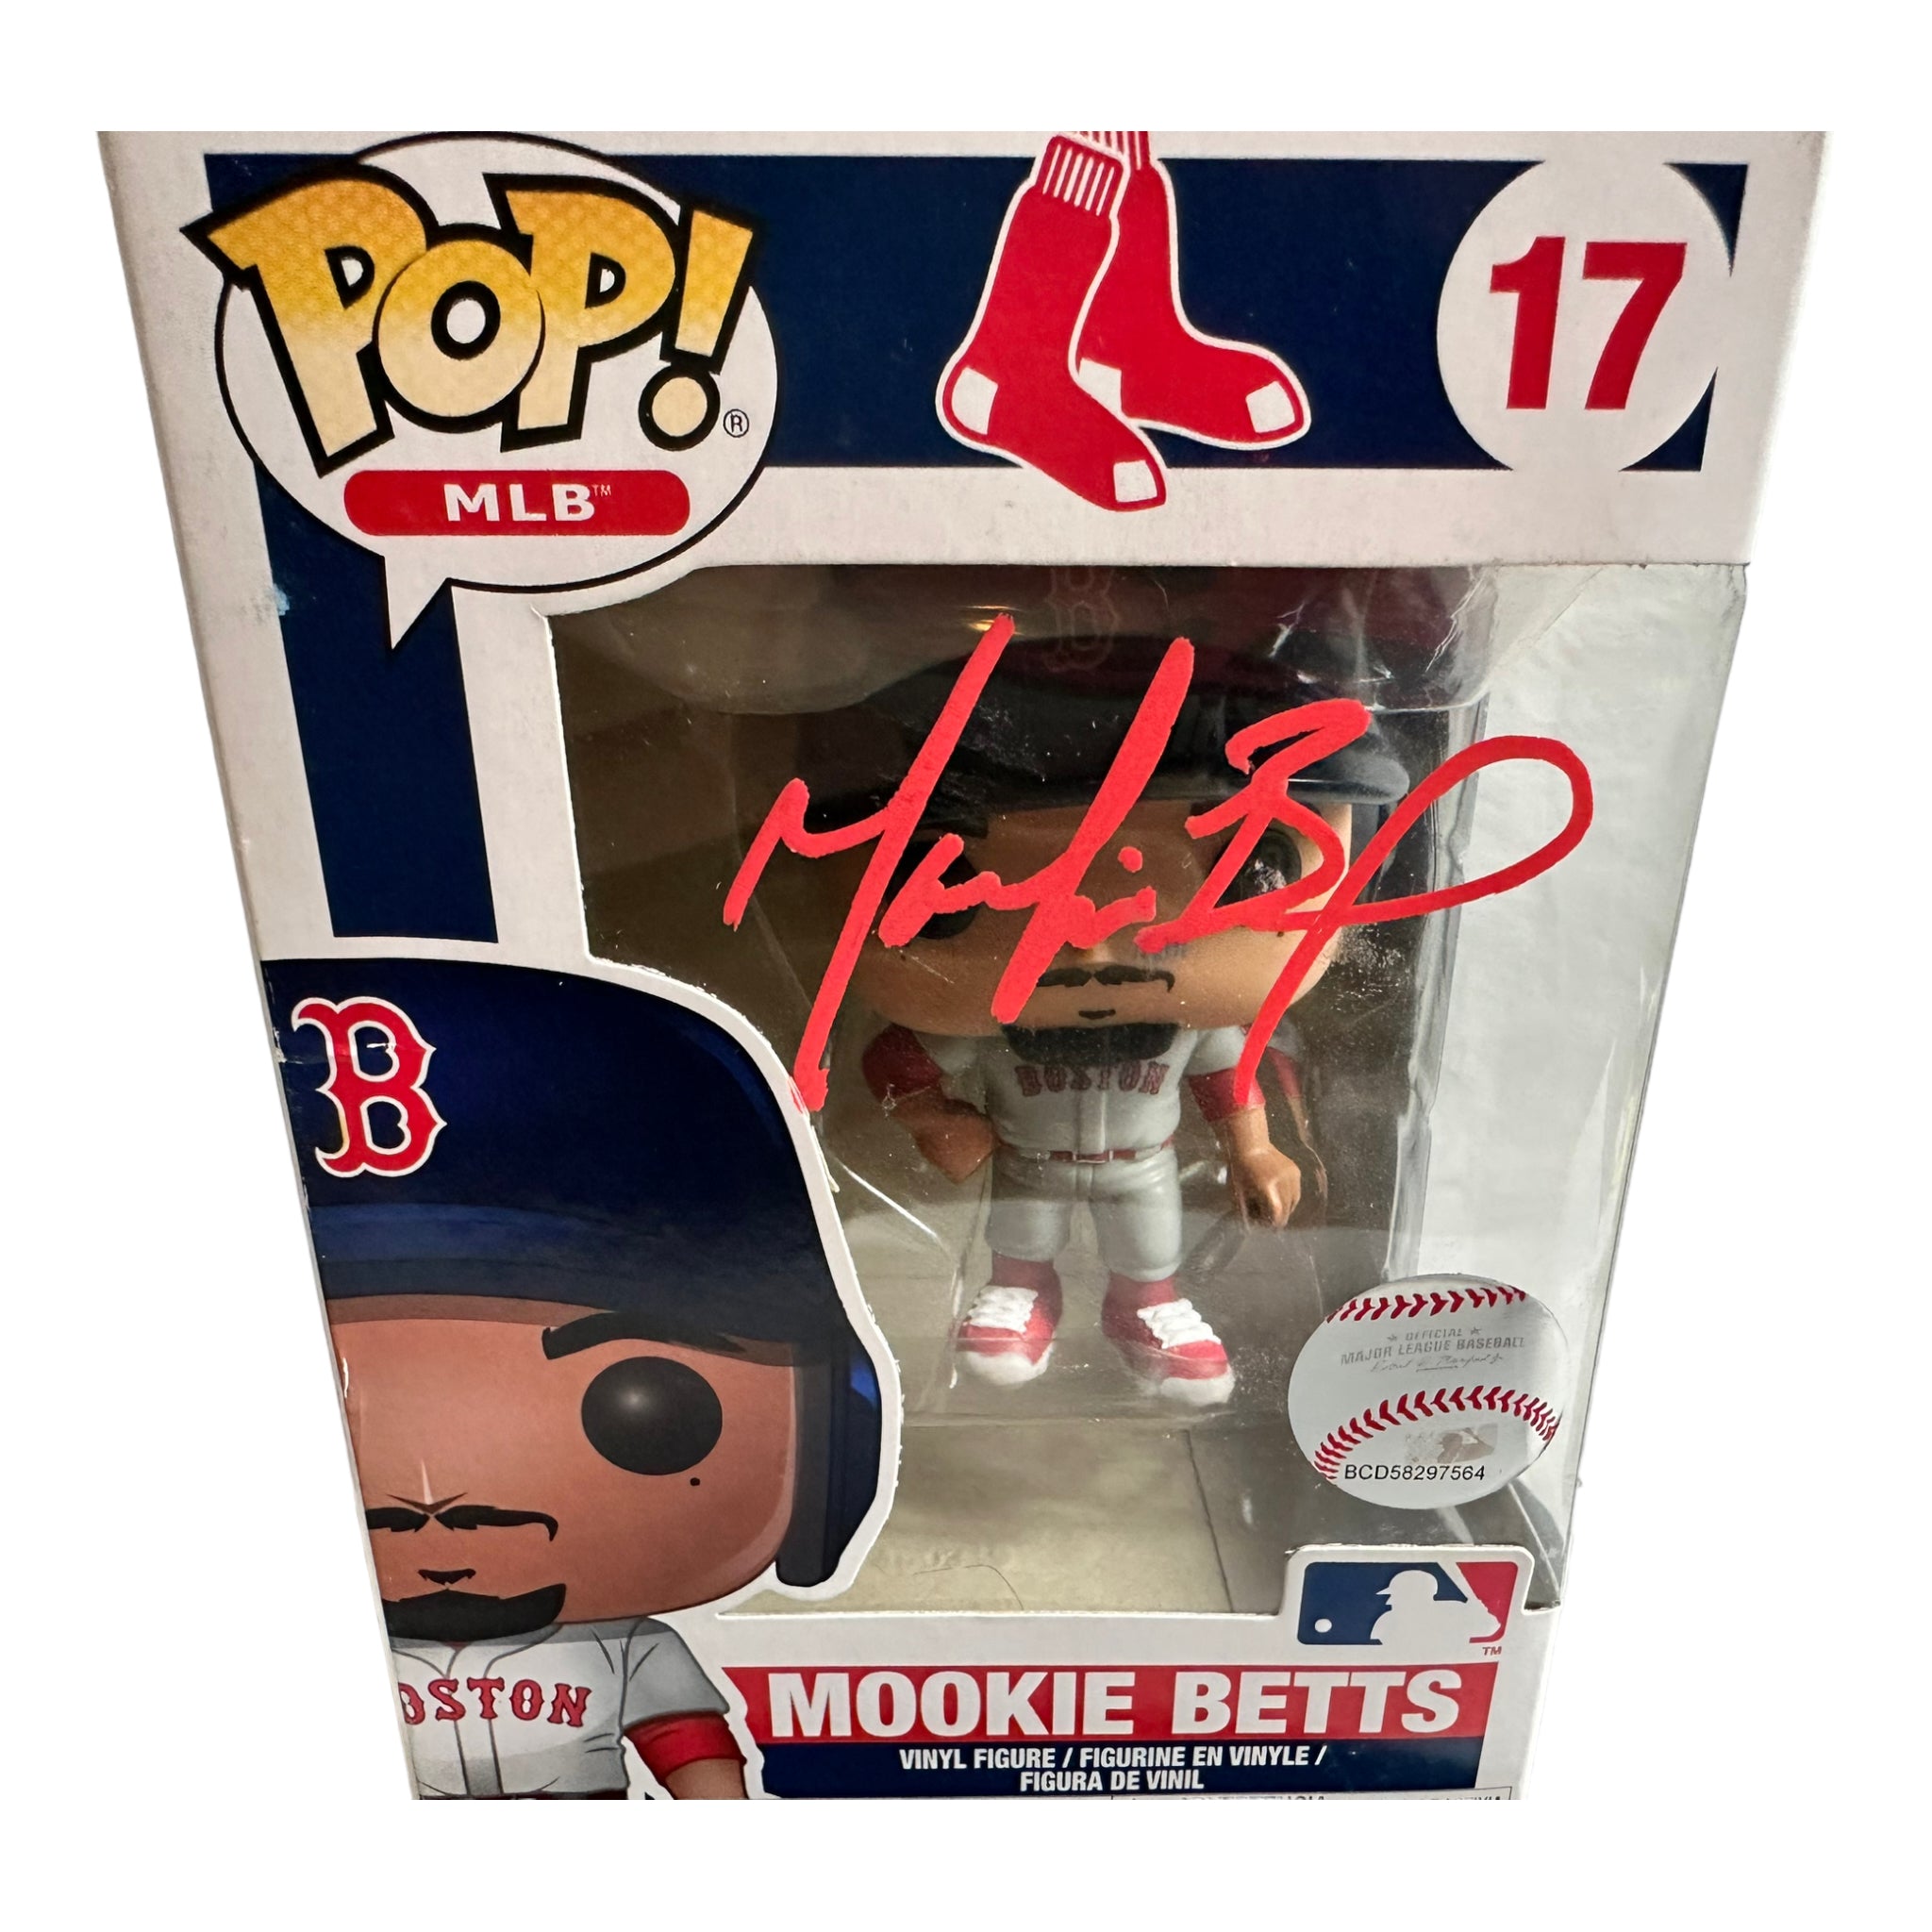 Mookie Betts Signed Baseball Red Sox - COA MLB - Memorabilia